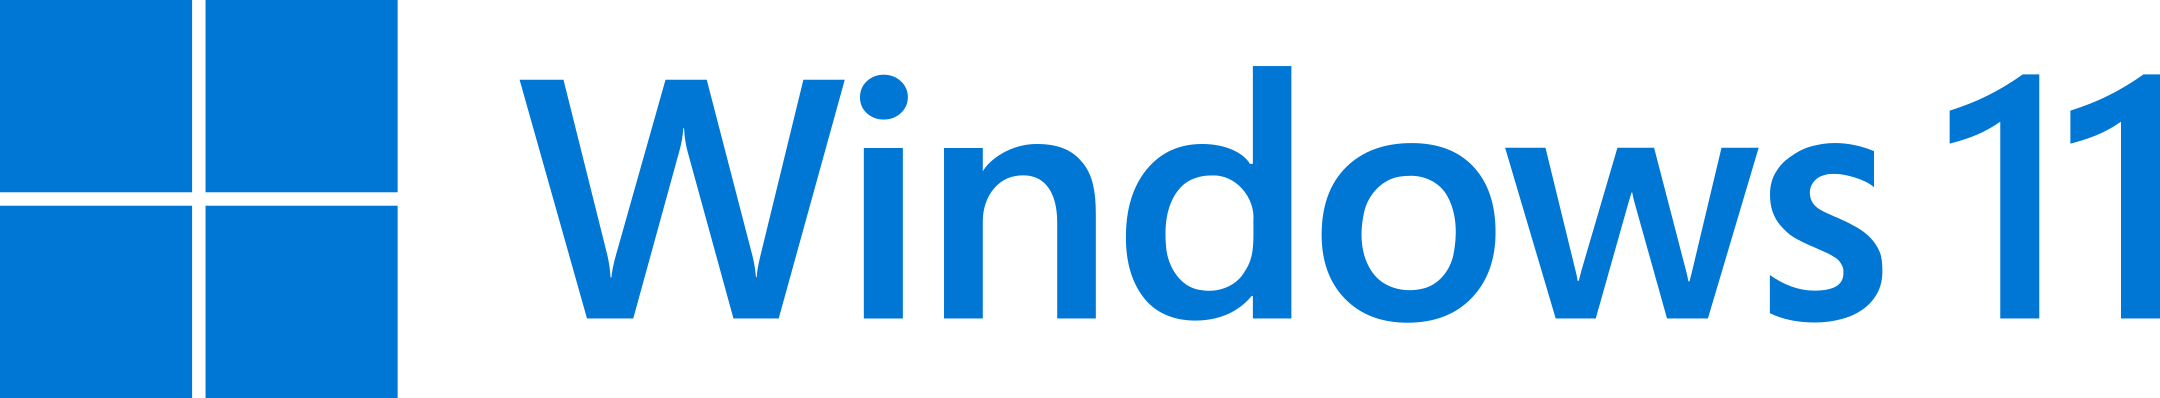 windows 11 logo 1 - Windows 11 Logo